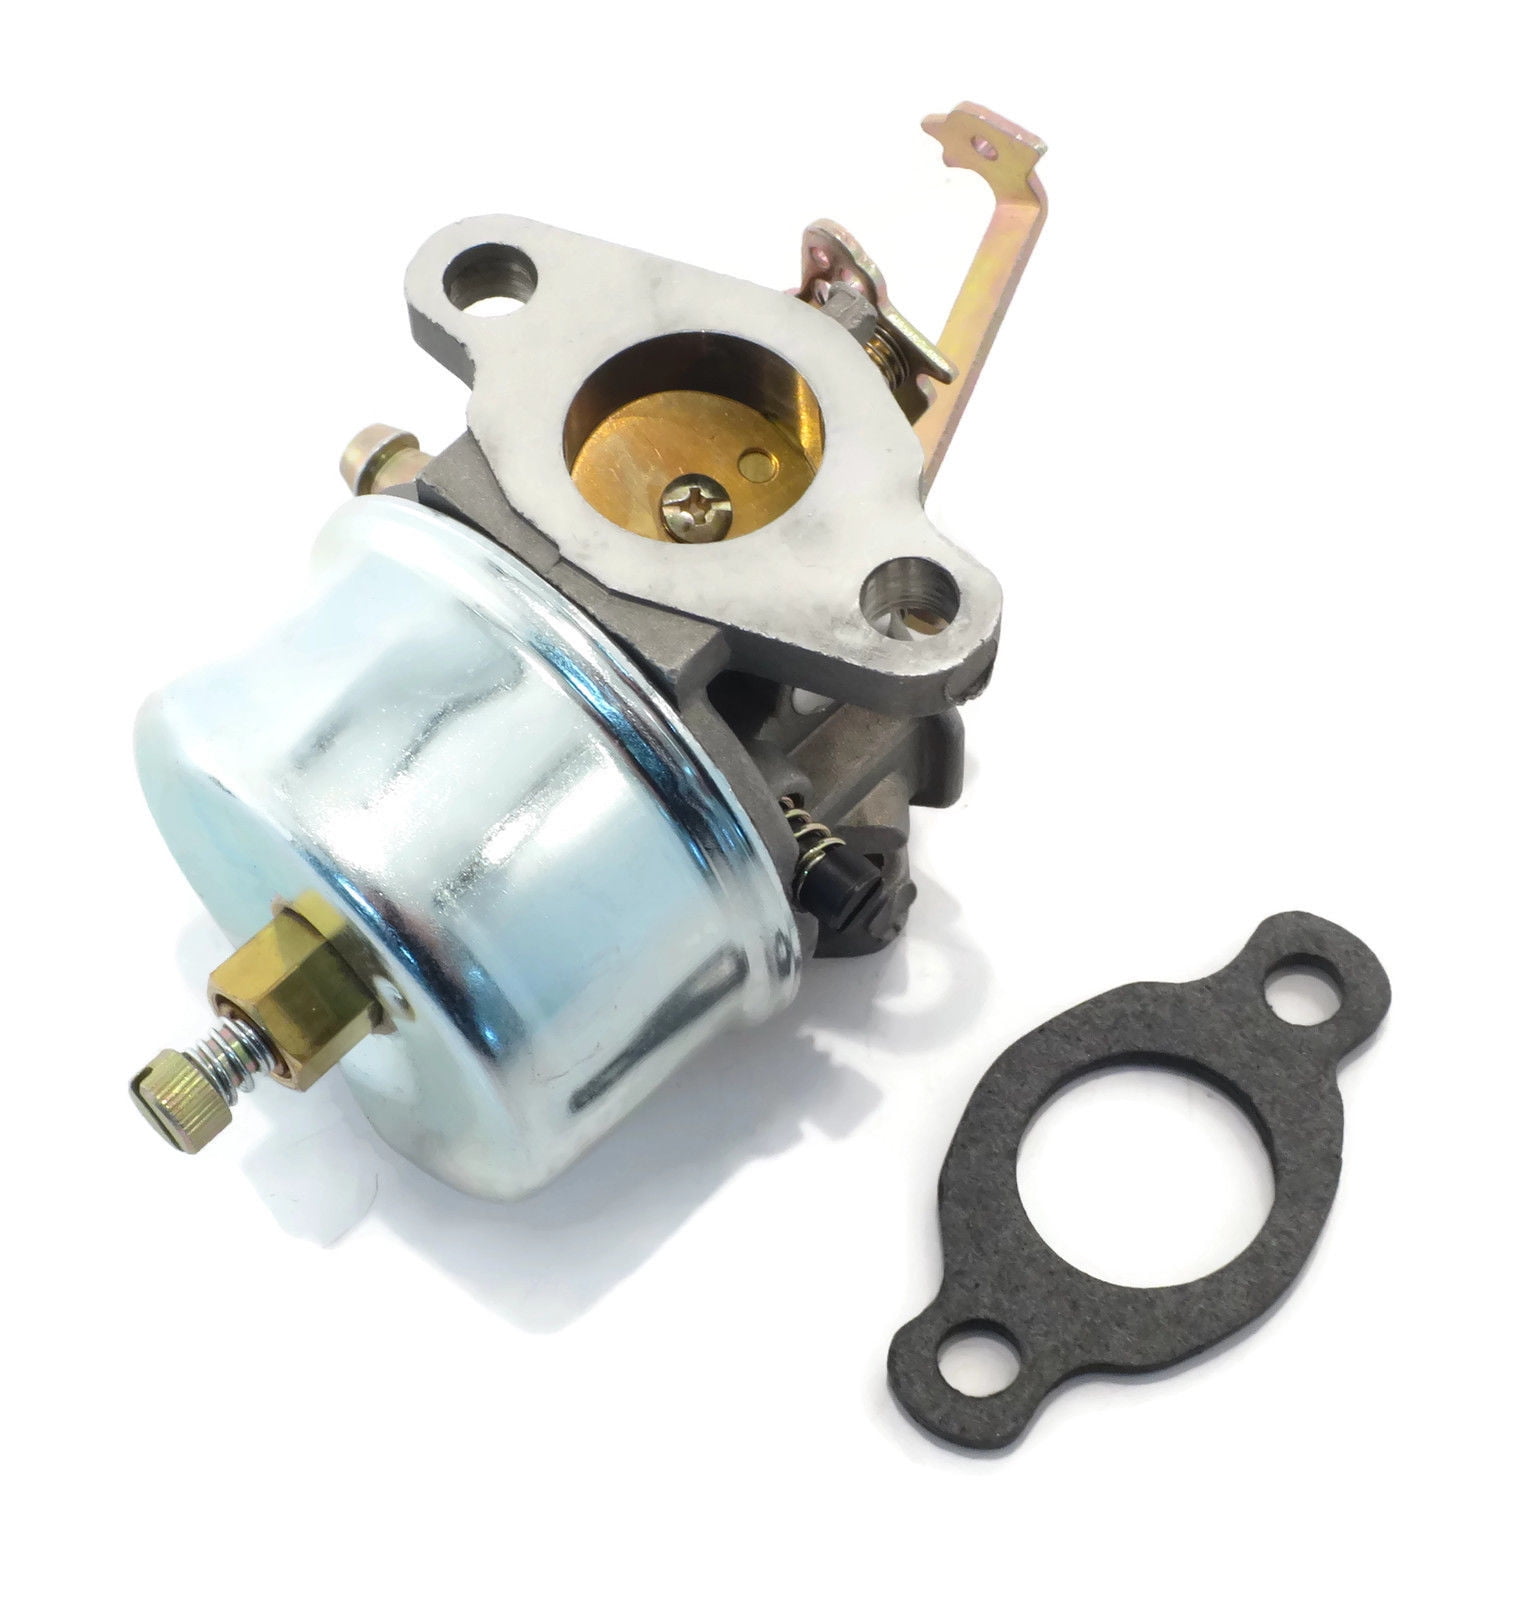 Details about   Air Filter Spark Plug Carburetor Kit For Tecumseh H30 H50 H60 632230. 